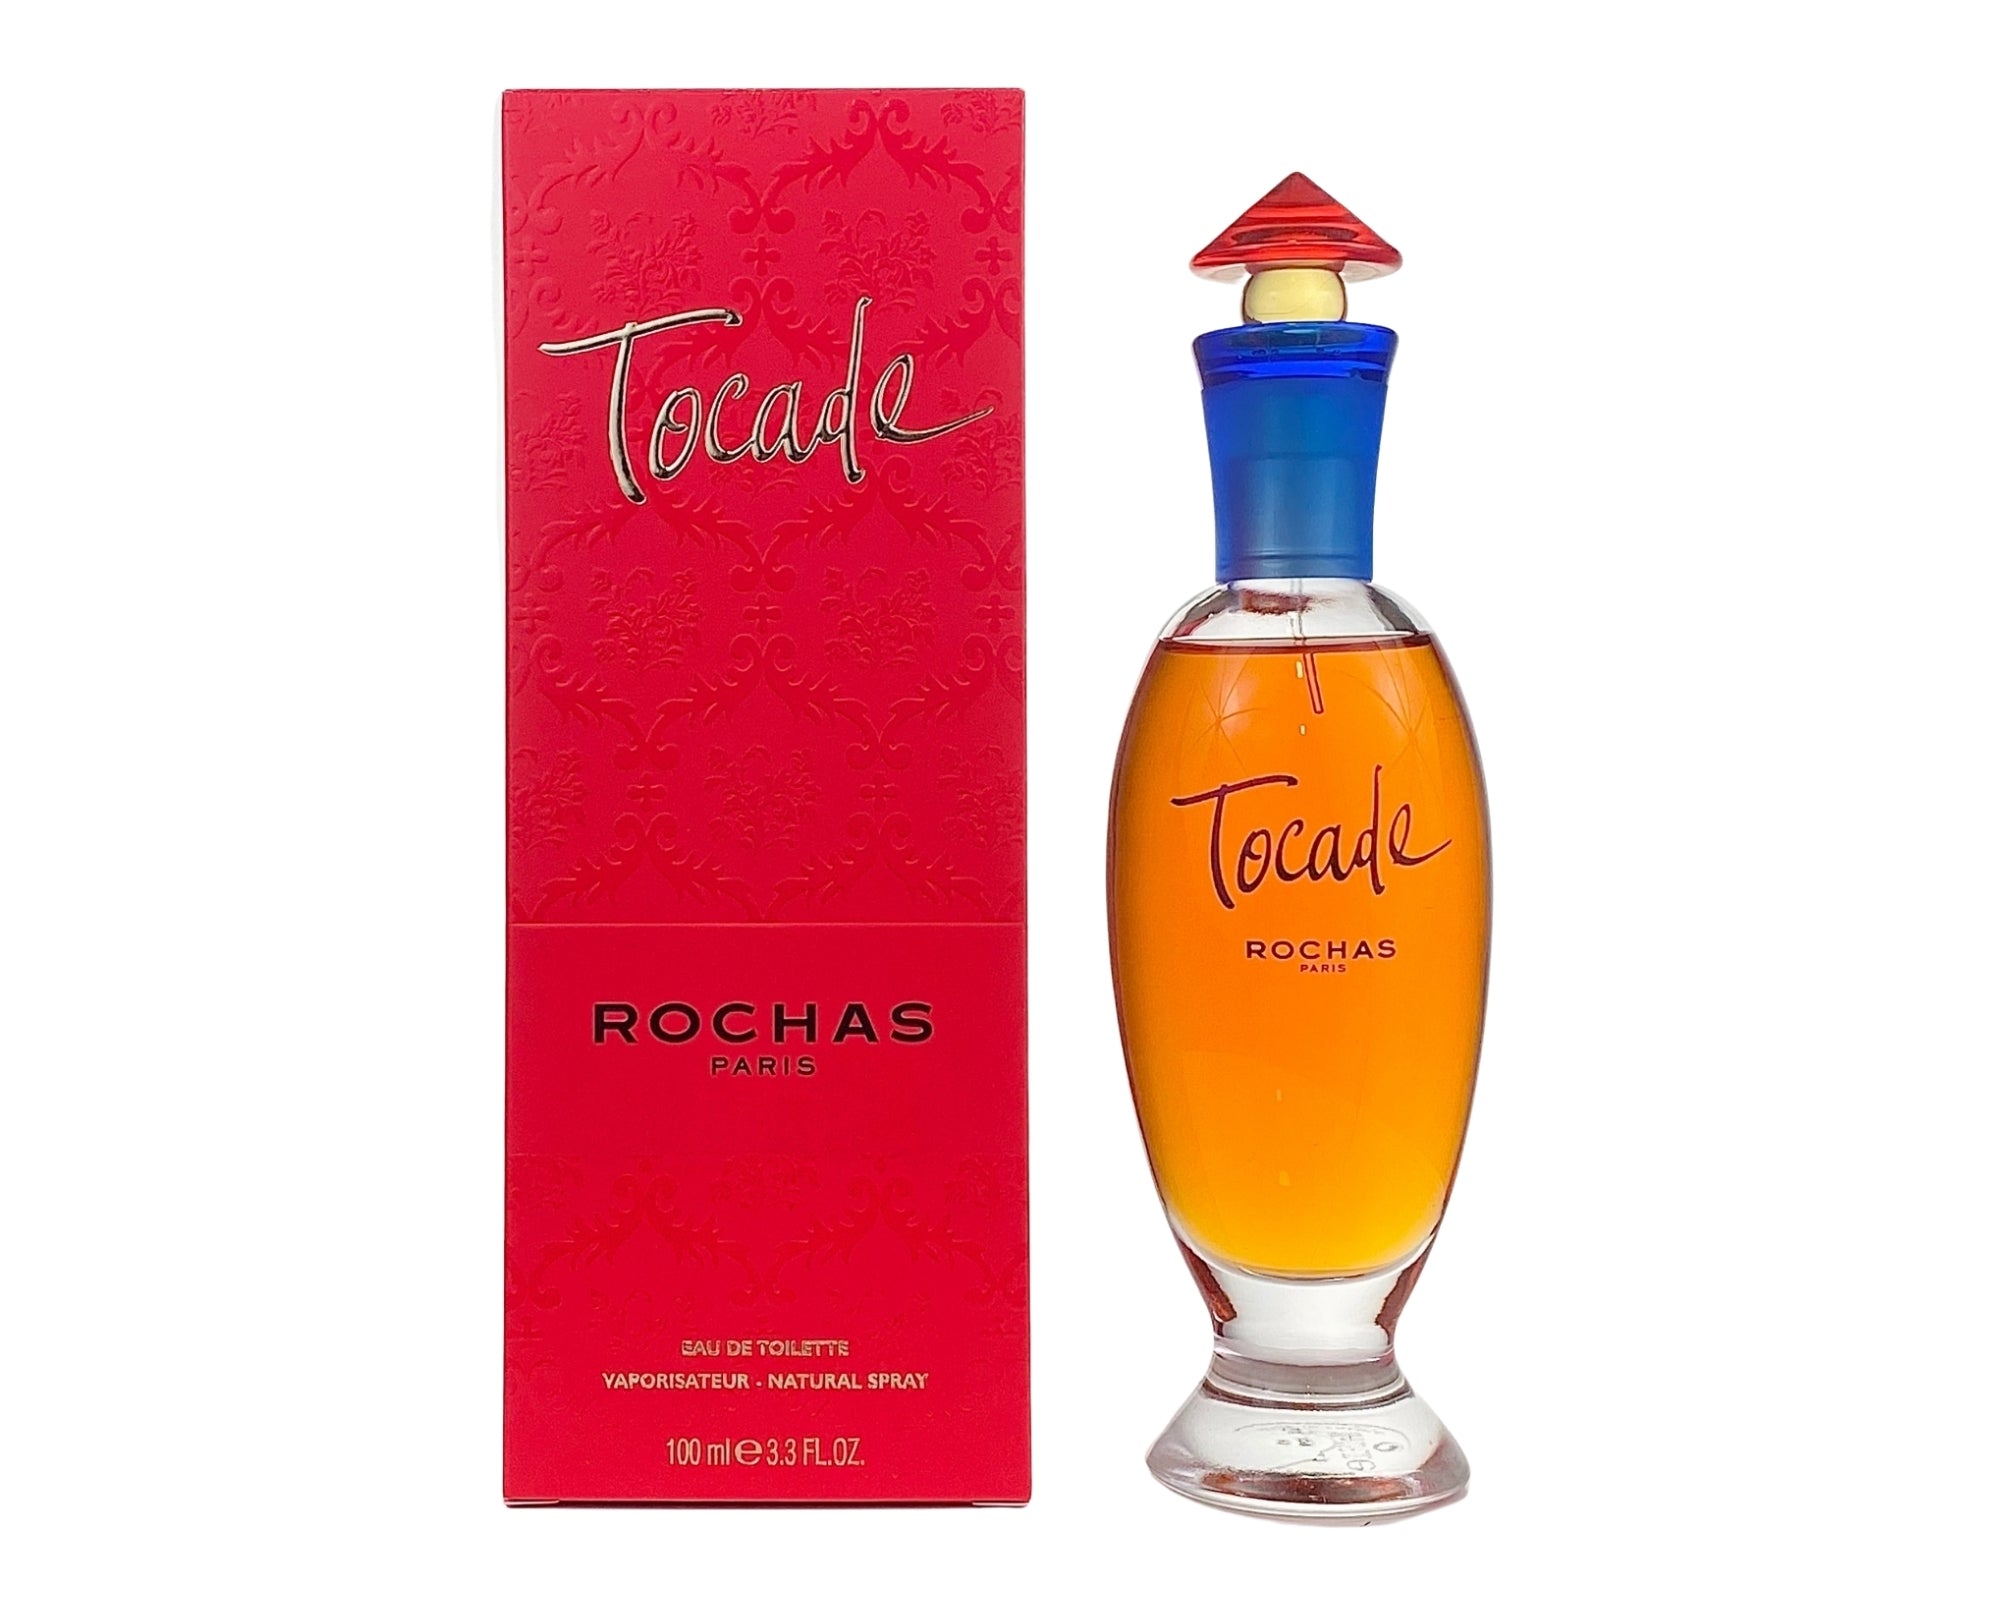 Lumiere Perfume by Rochas 1.7 oz / 50 ml Eau De Toilette Spray for